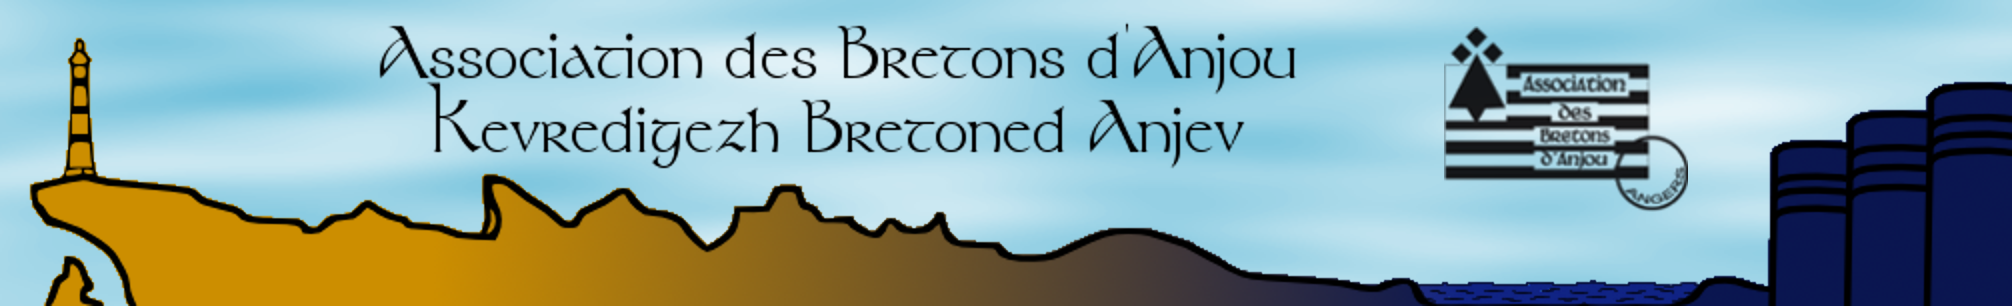 KBA Association des Bretons d'Anjou